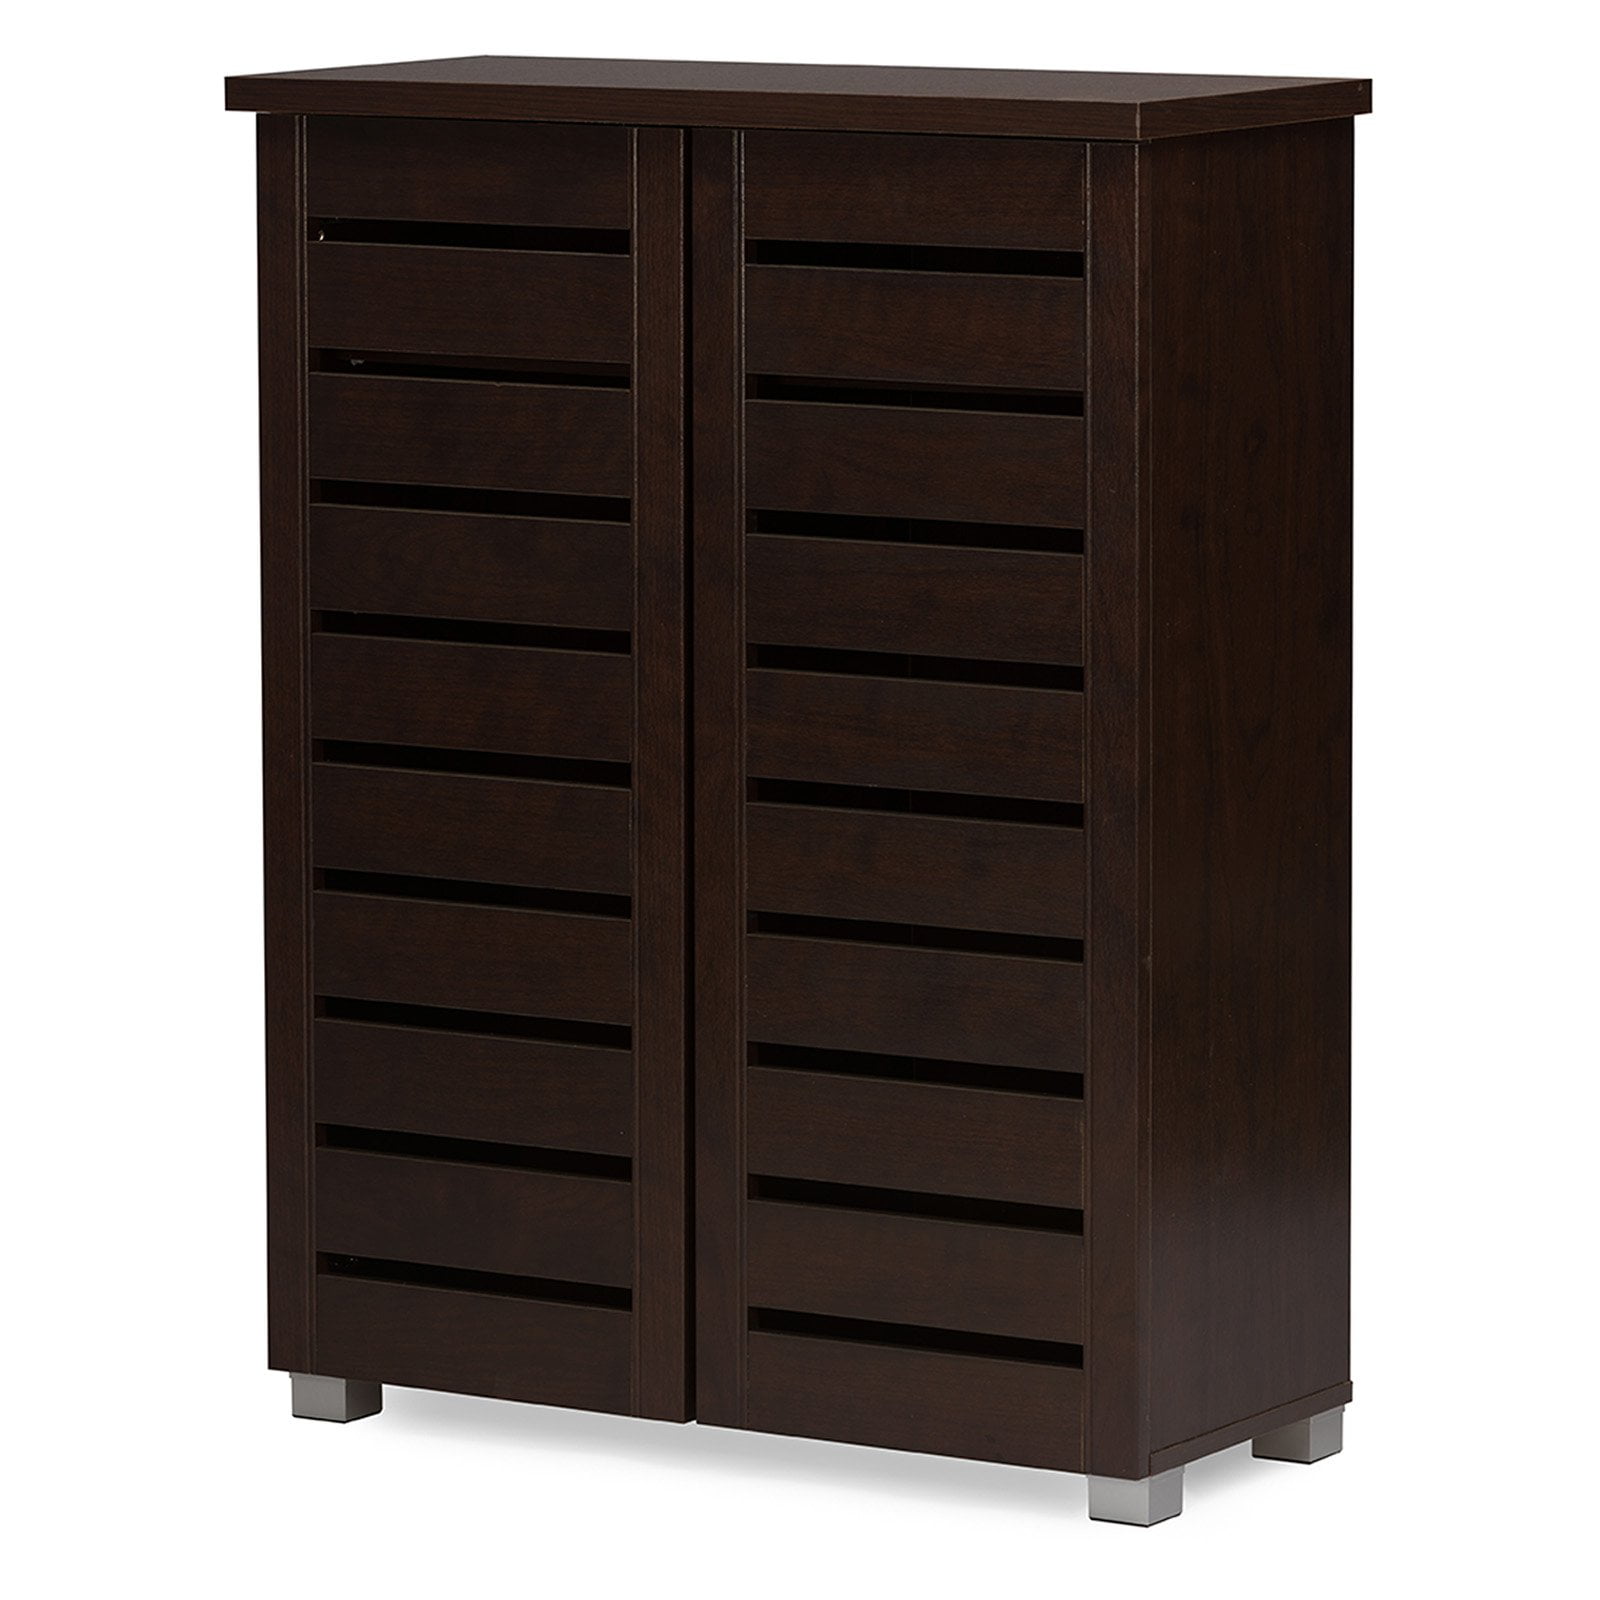 Fernanda Medium Brown Wood Tall Storage Cabinet Home Office Furniture 